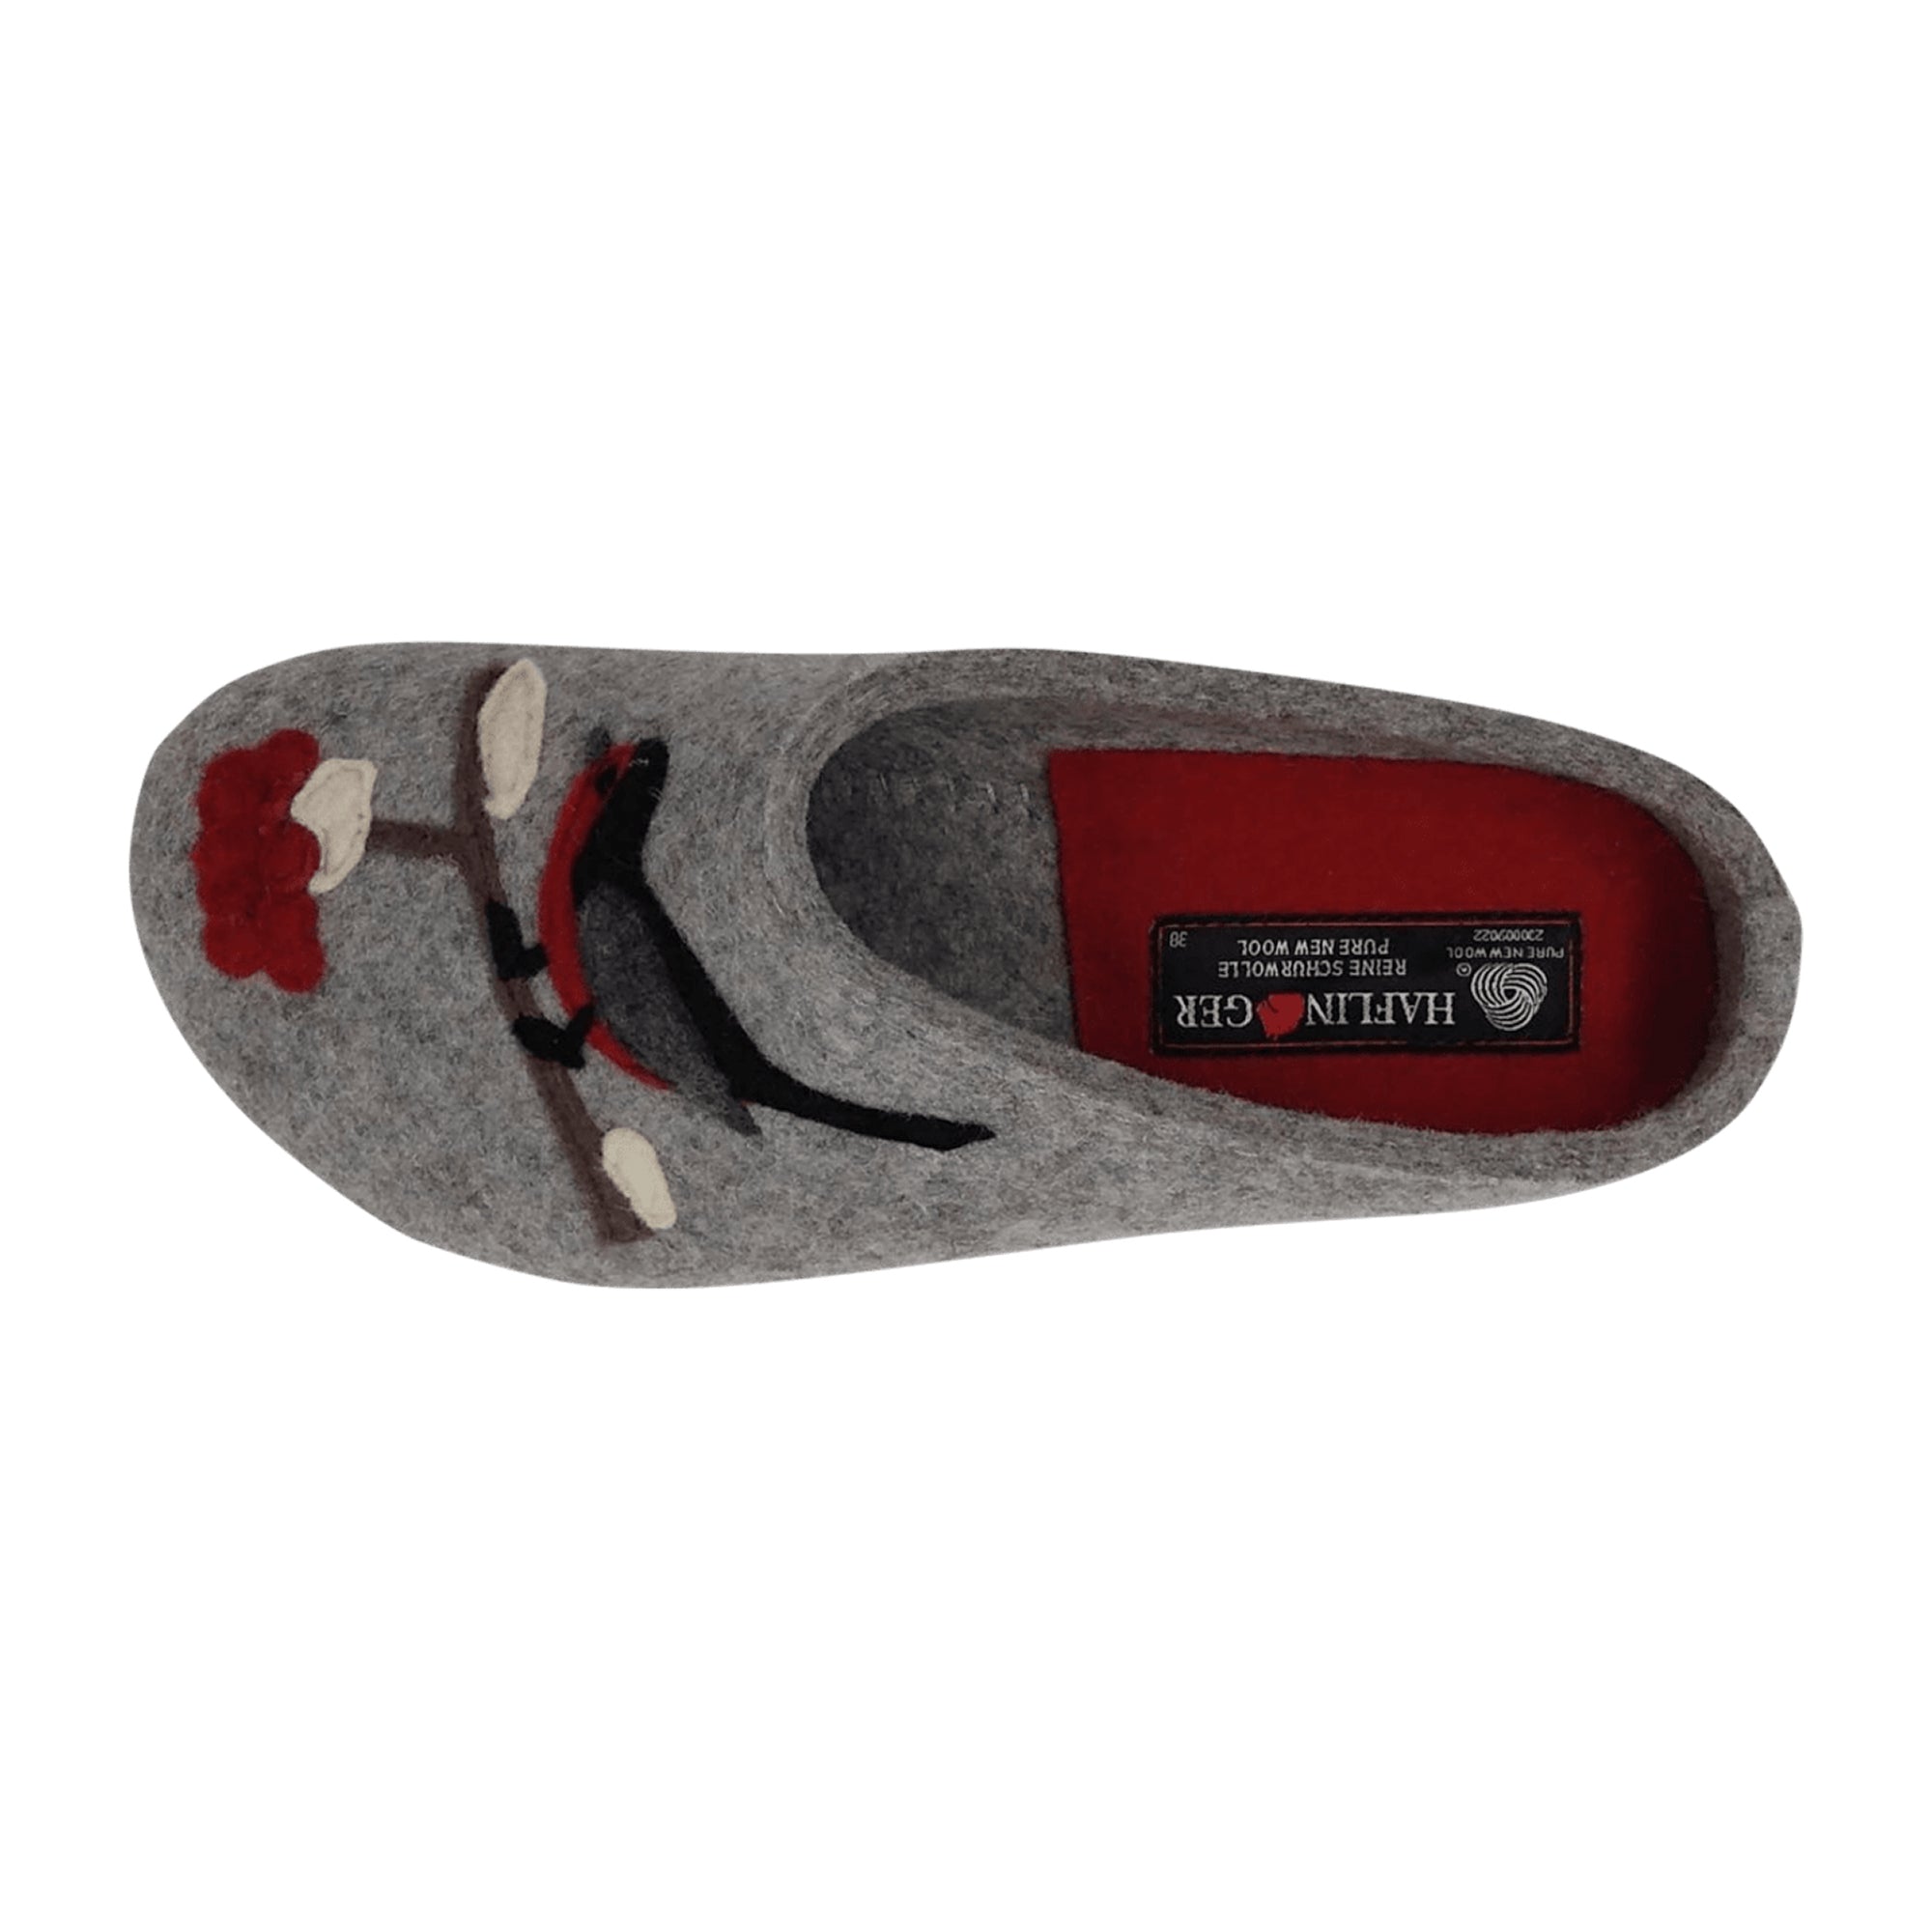 Haflinger 731089 Women's Grey Comfort Slippers - Stylish & Durable